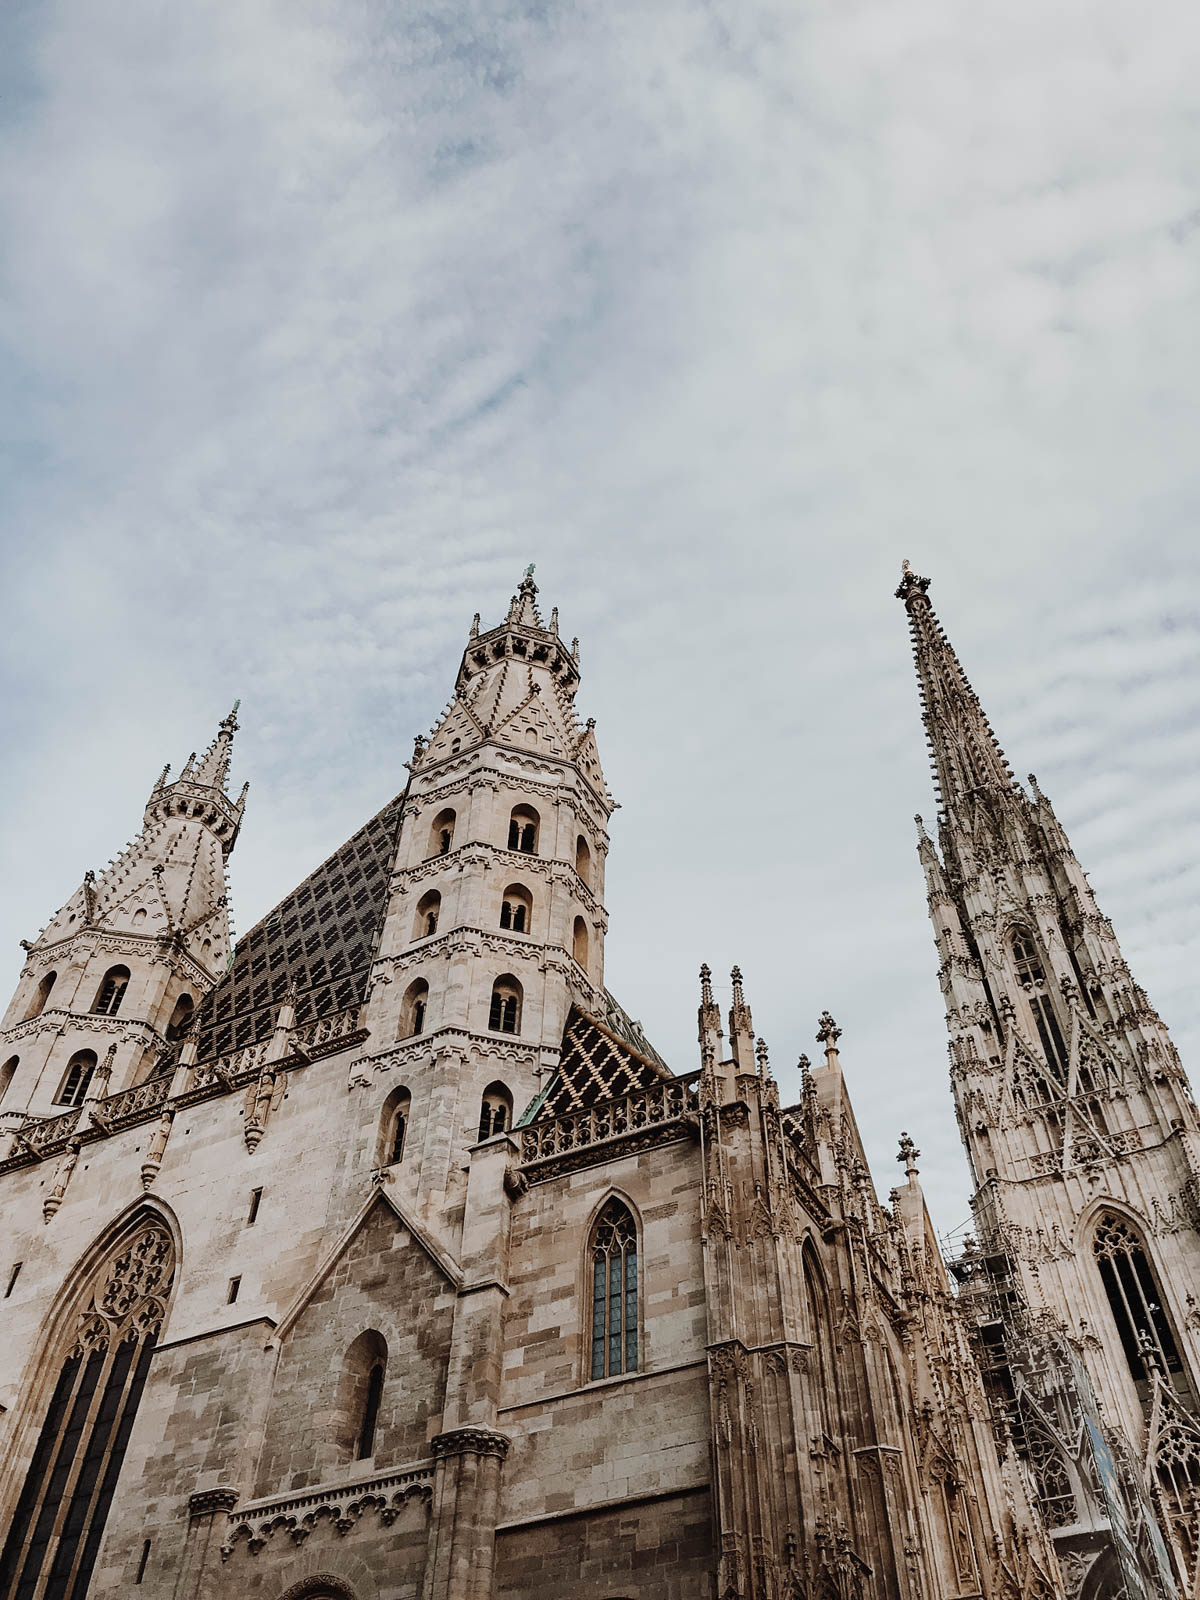 Vienna Austria Travel Guide - Architecture // RG Daily Blog